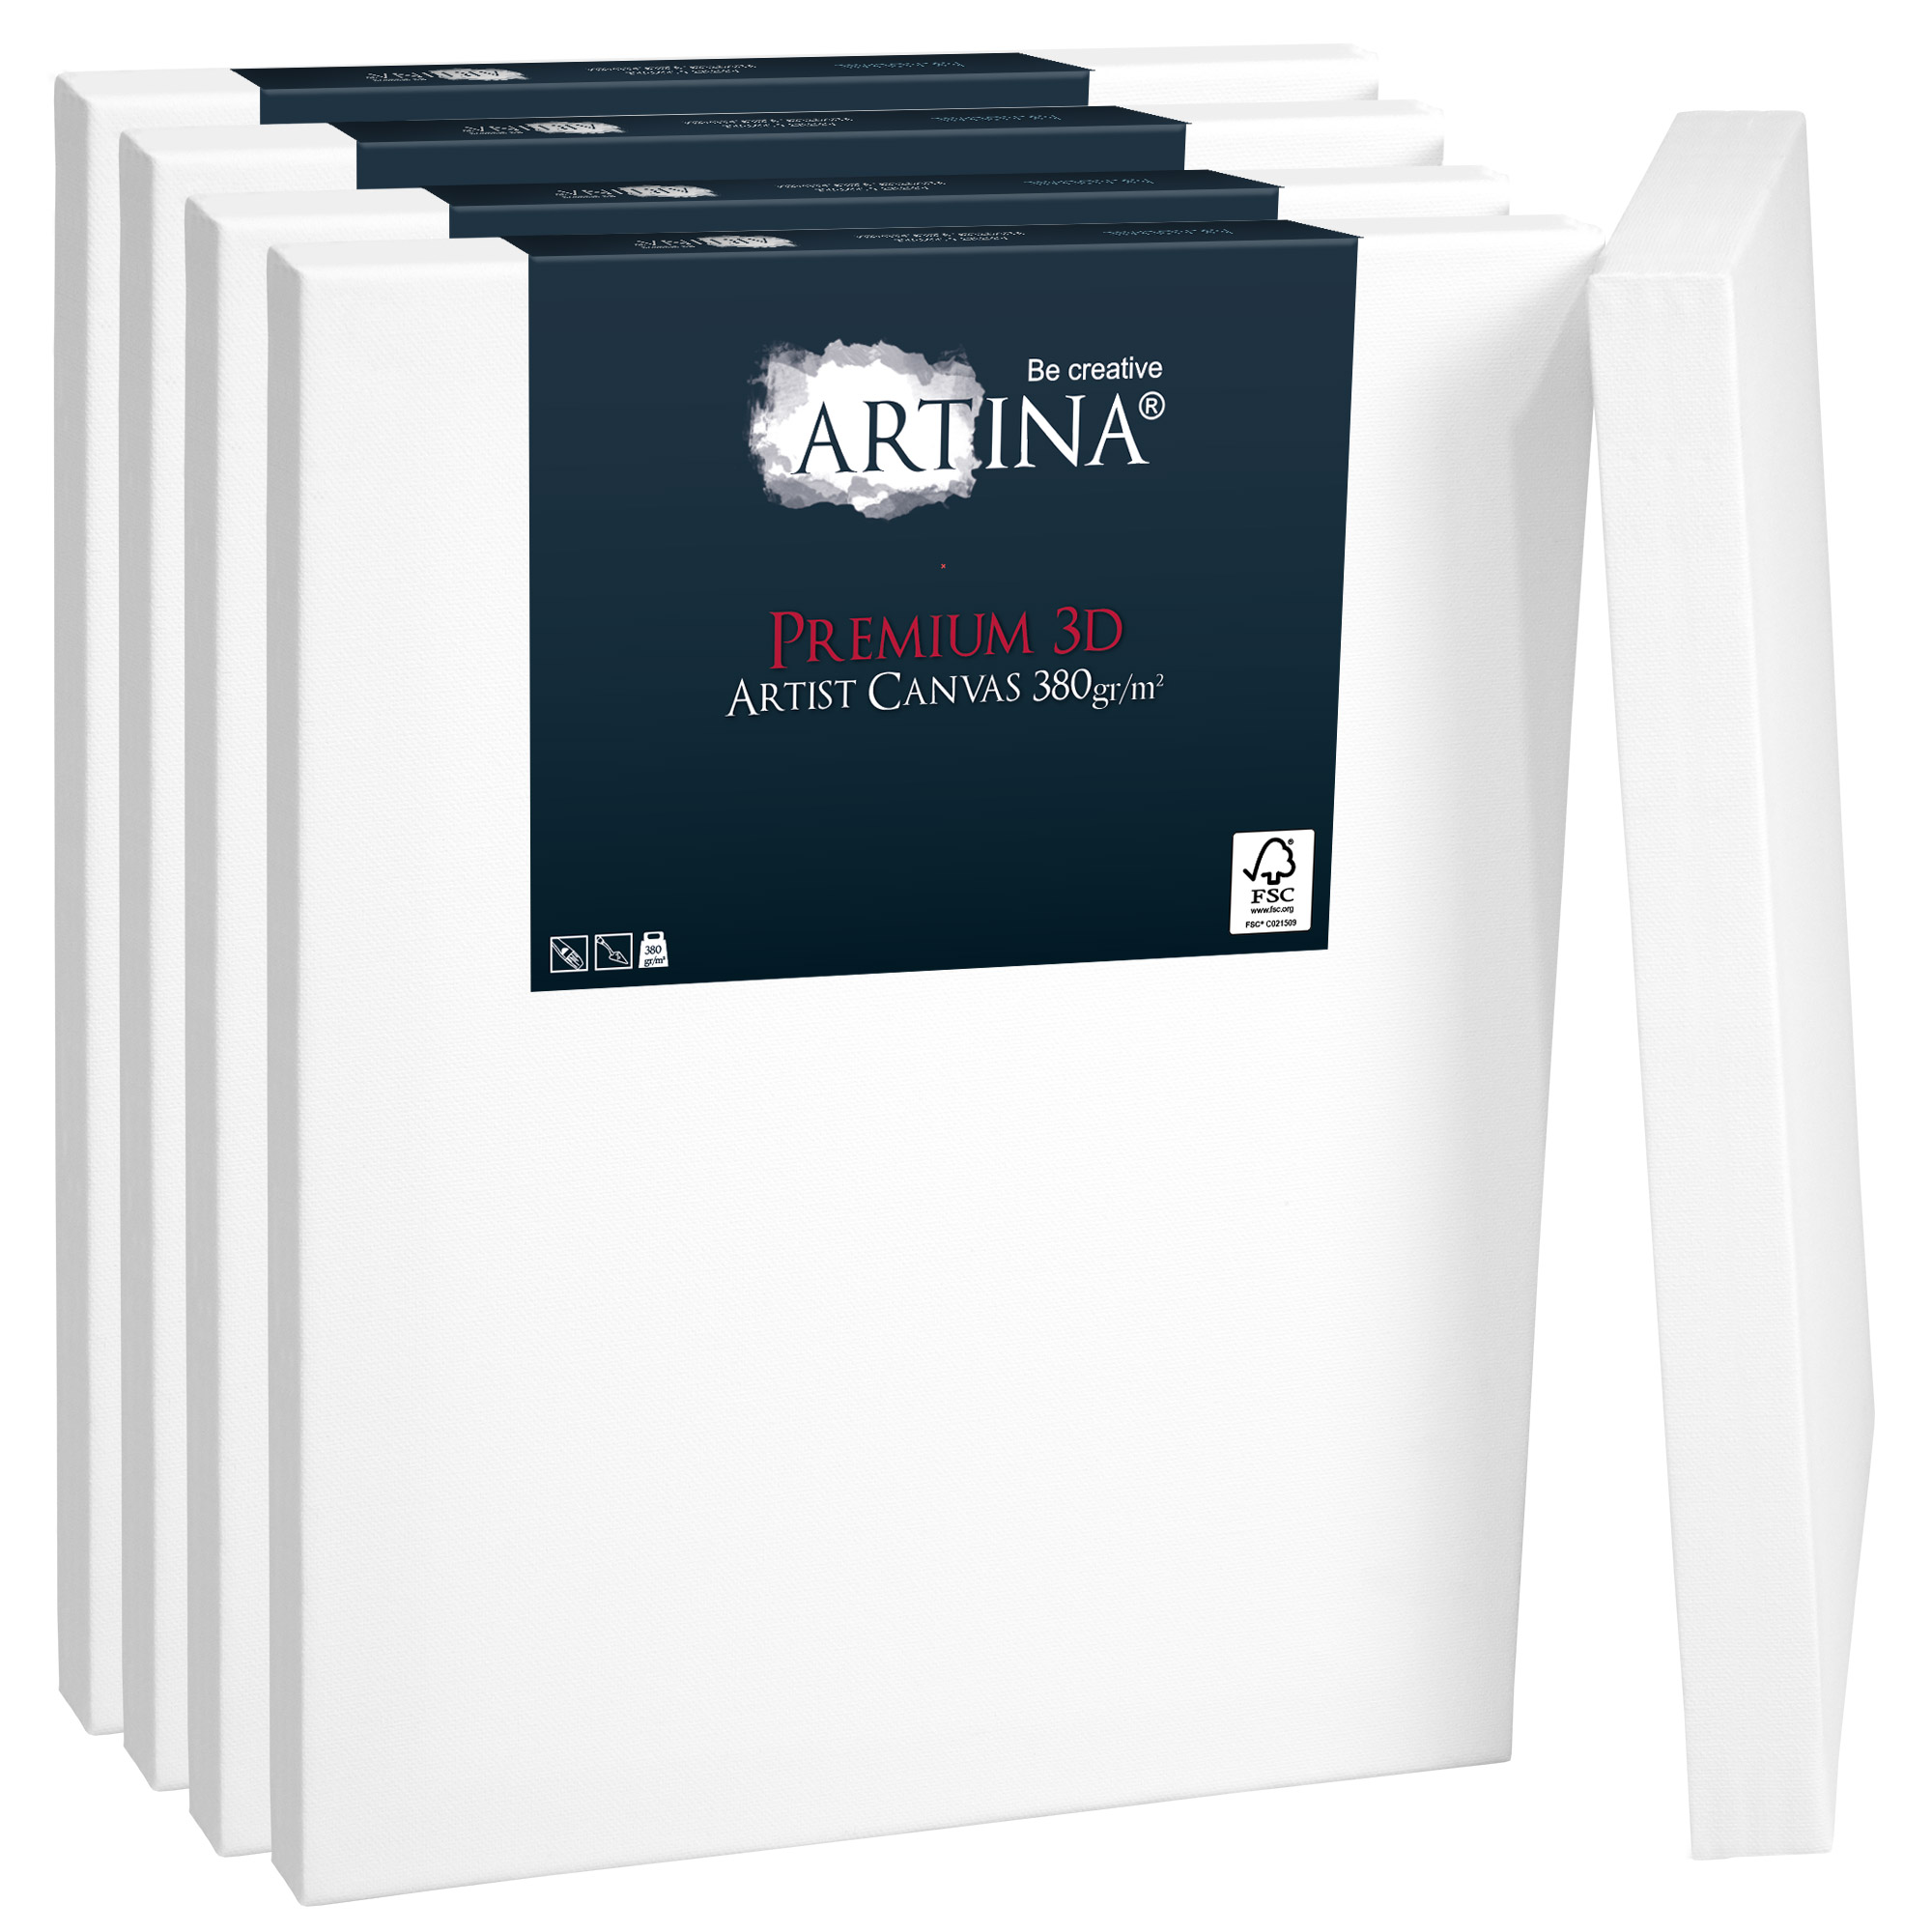 5er Set Artina Premium 3D 380g/m² Leinwand auf Keilrahmen FSC®-zertifiziert - div. Größen